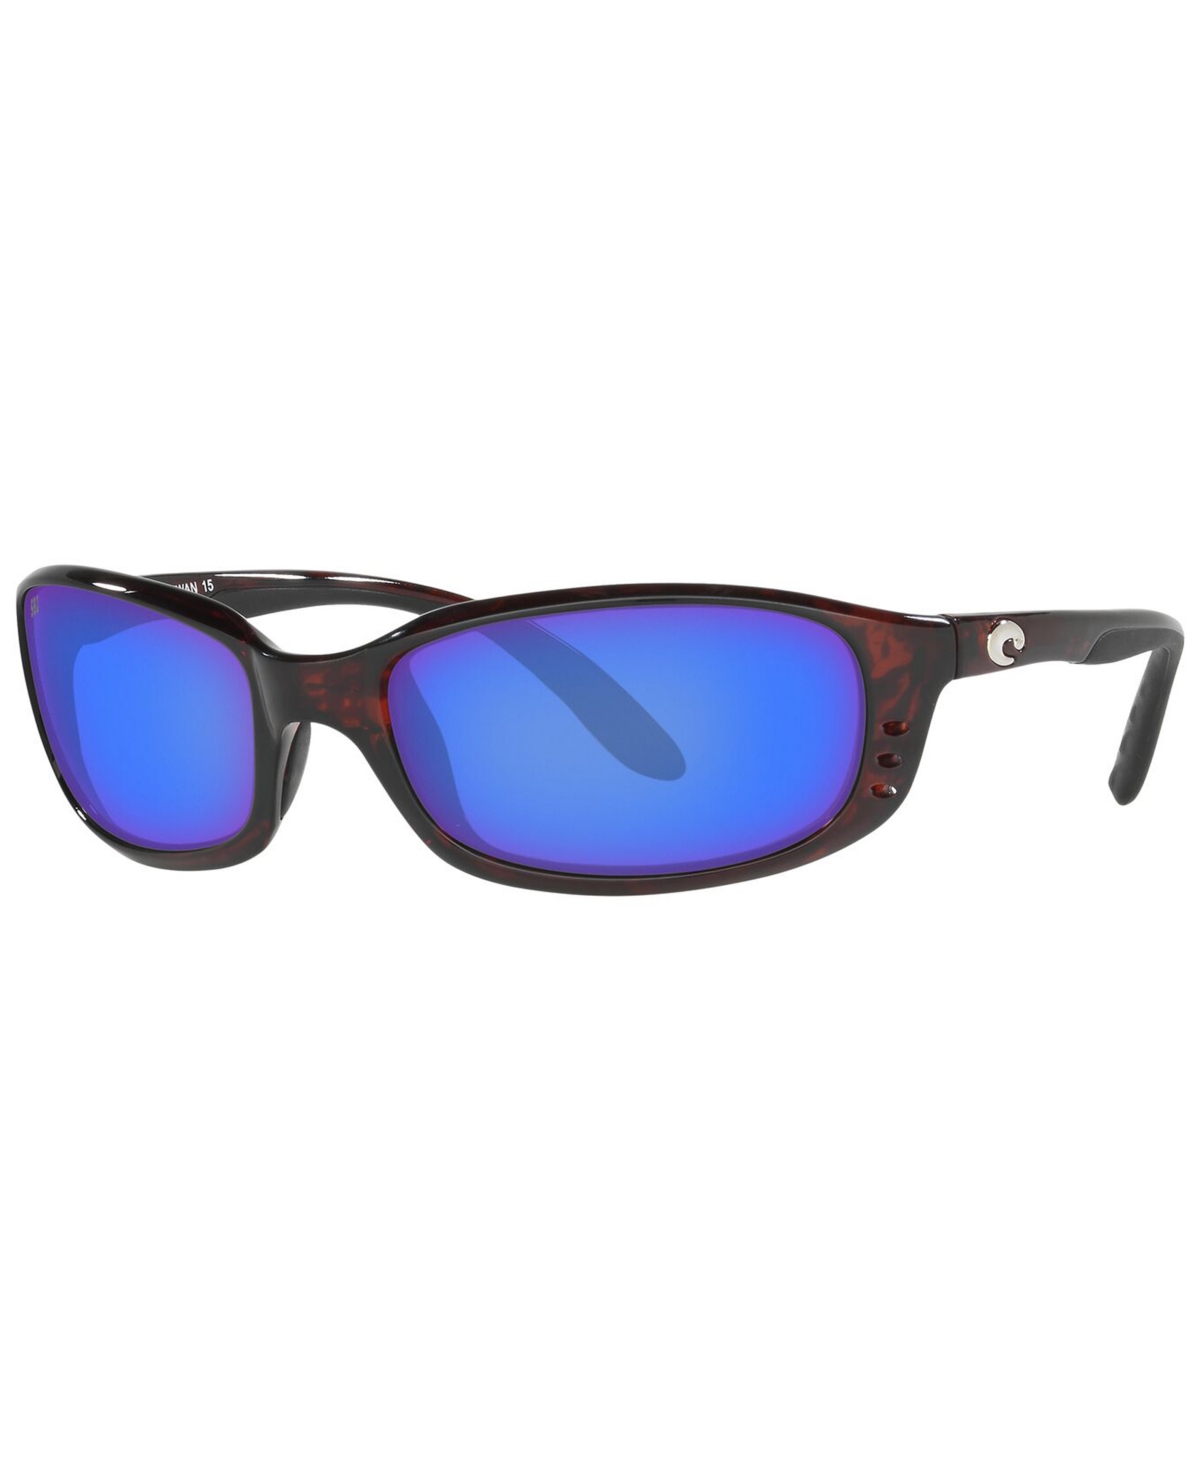 Men's Brine Polarized Sunglasses - TORTOISE BROWN/BLUE POLAR